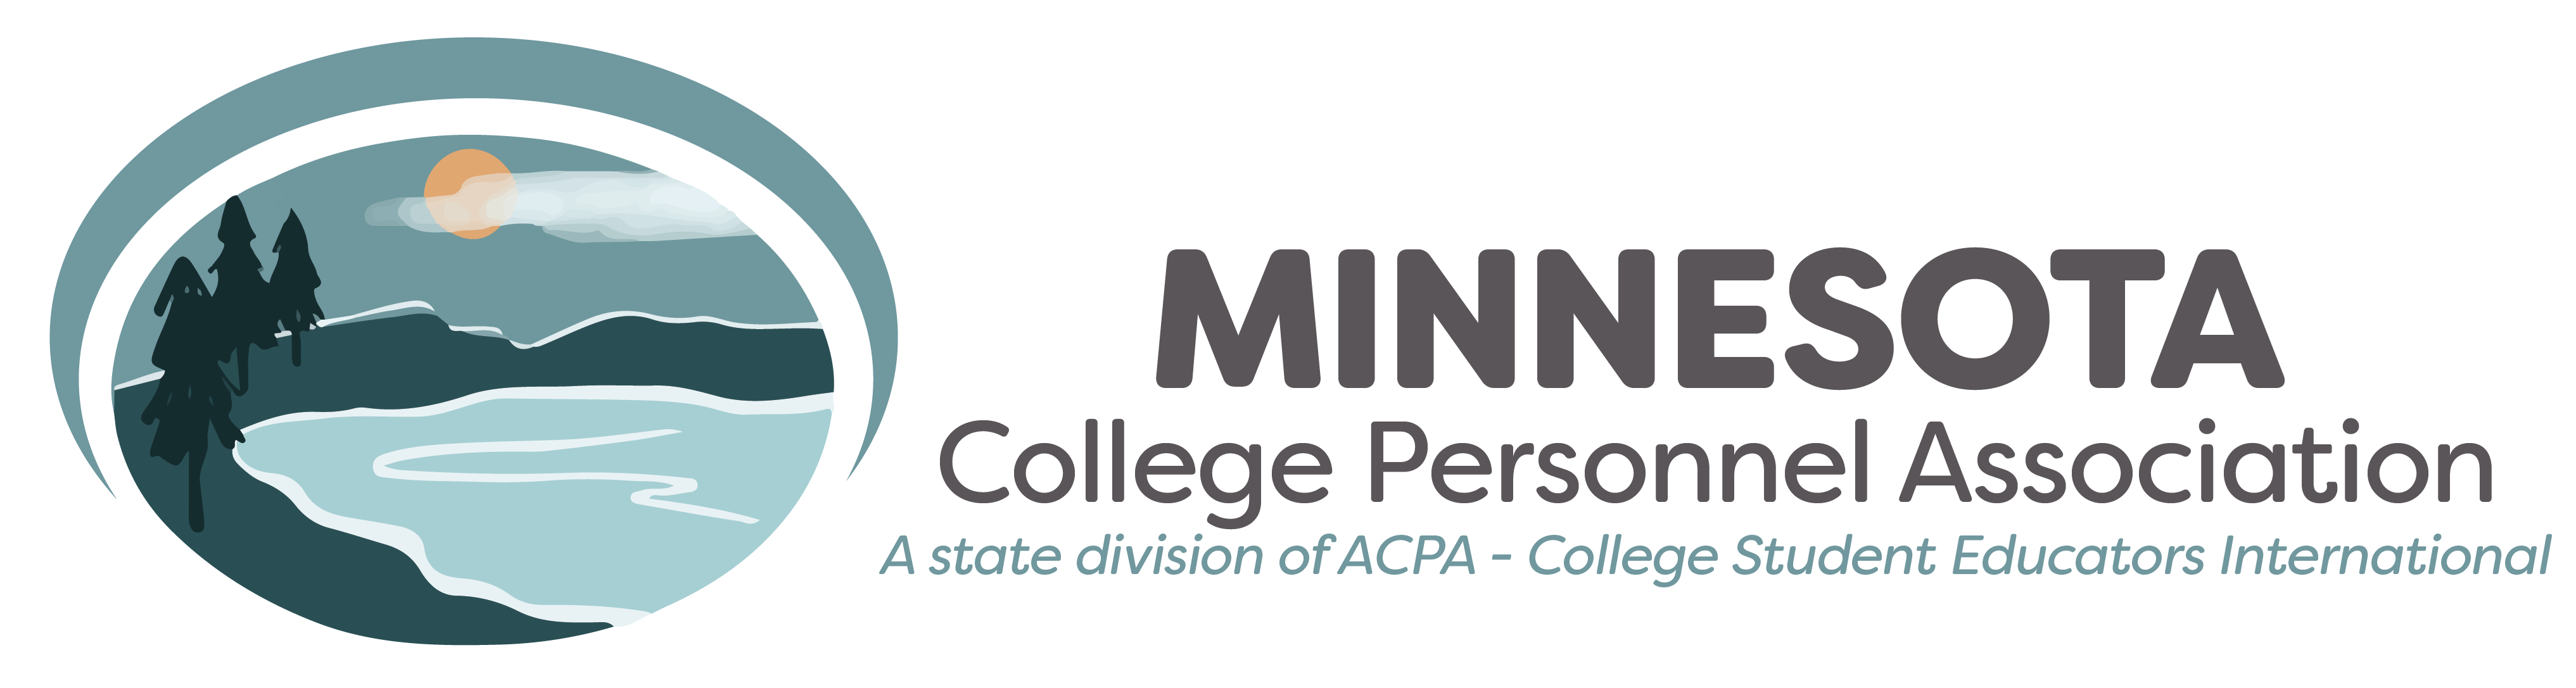 Minnesota College Personnel Association